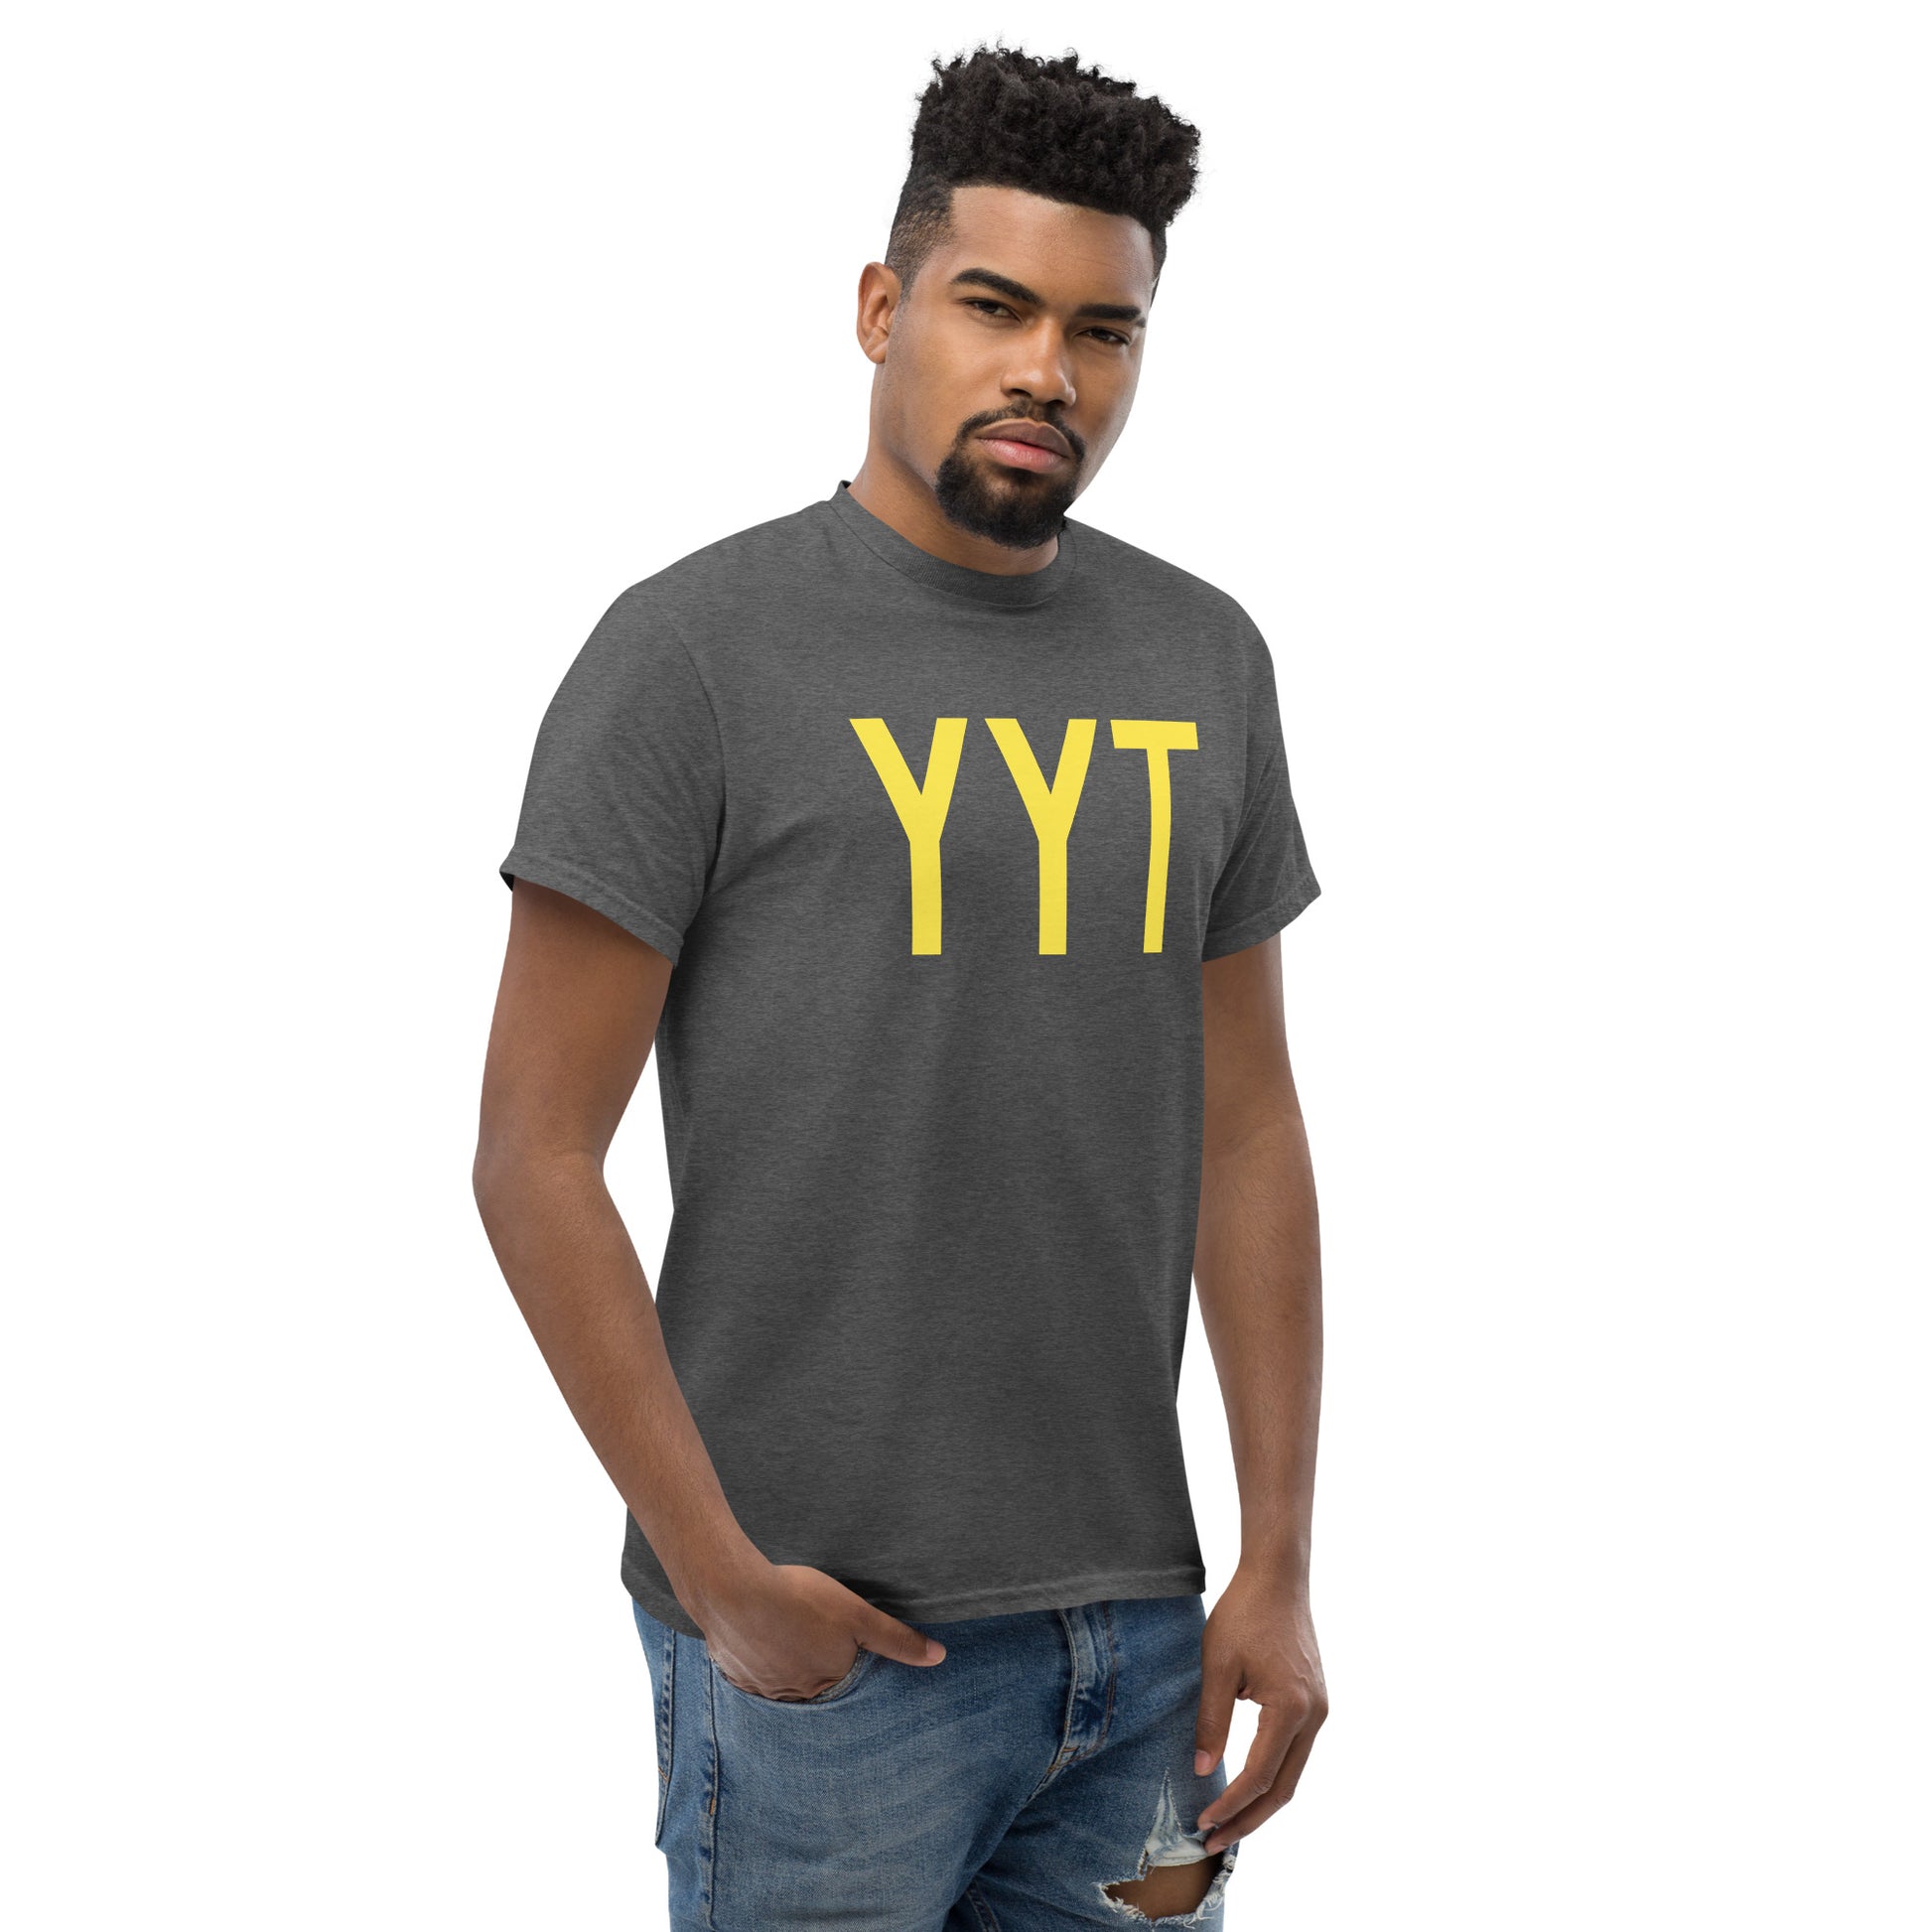 Aviation-Theme Men's T-Shirt - Yellow Graphic • YYT St. John's • YHM Designs - Image 08